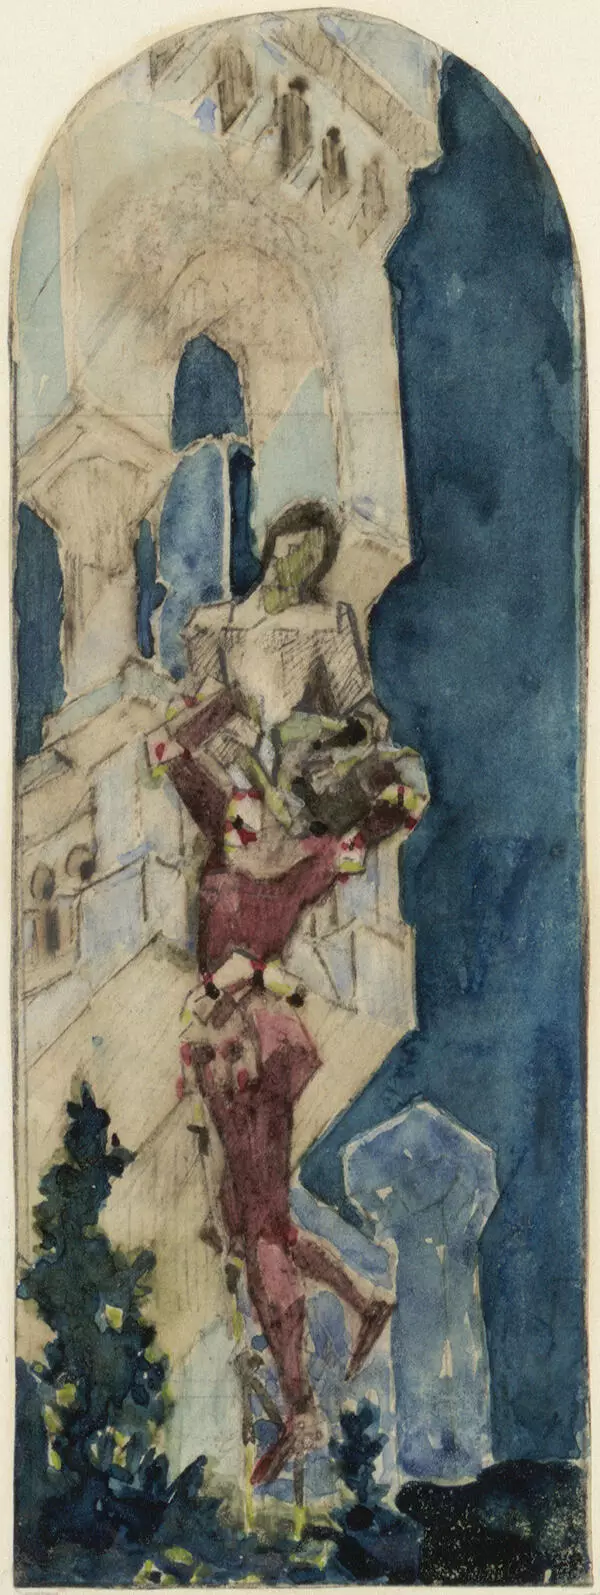 Ромео и Джульетта. Сцена на балконе